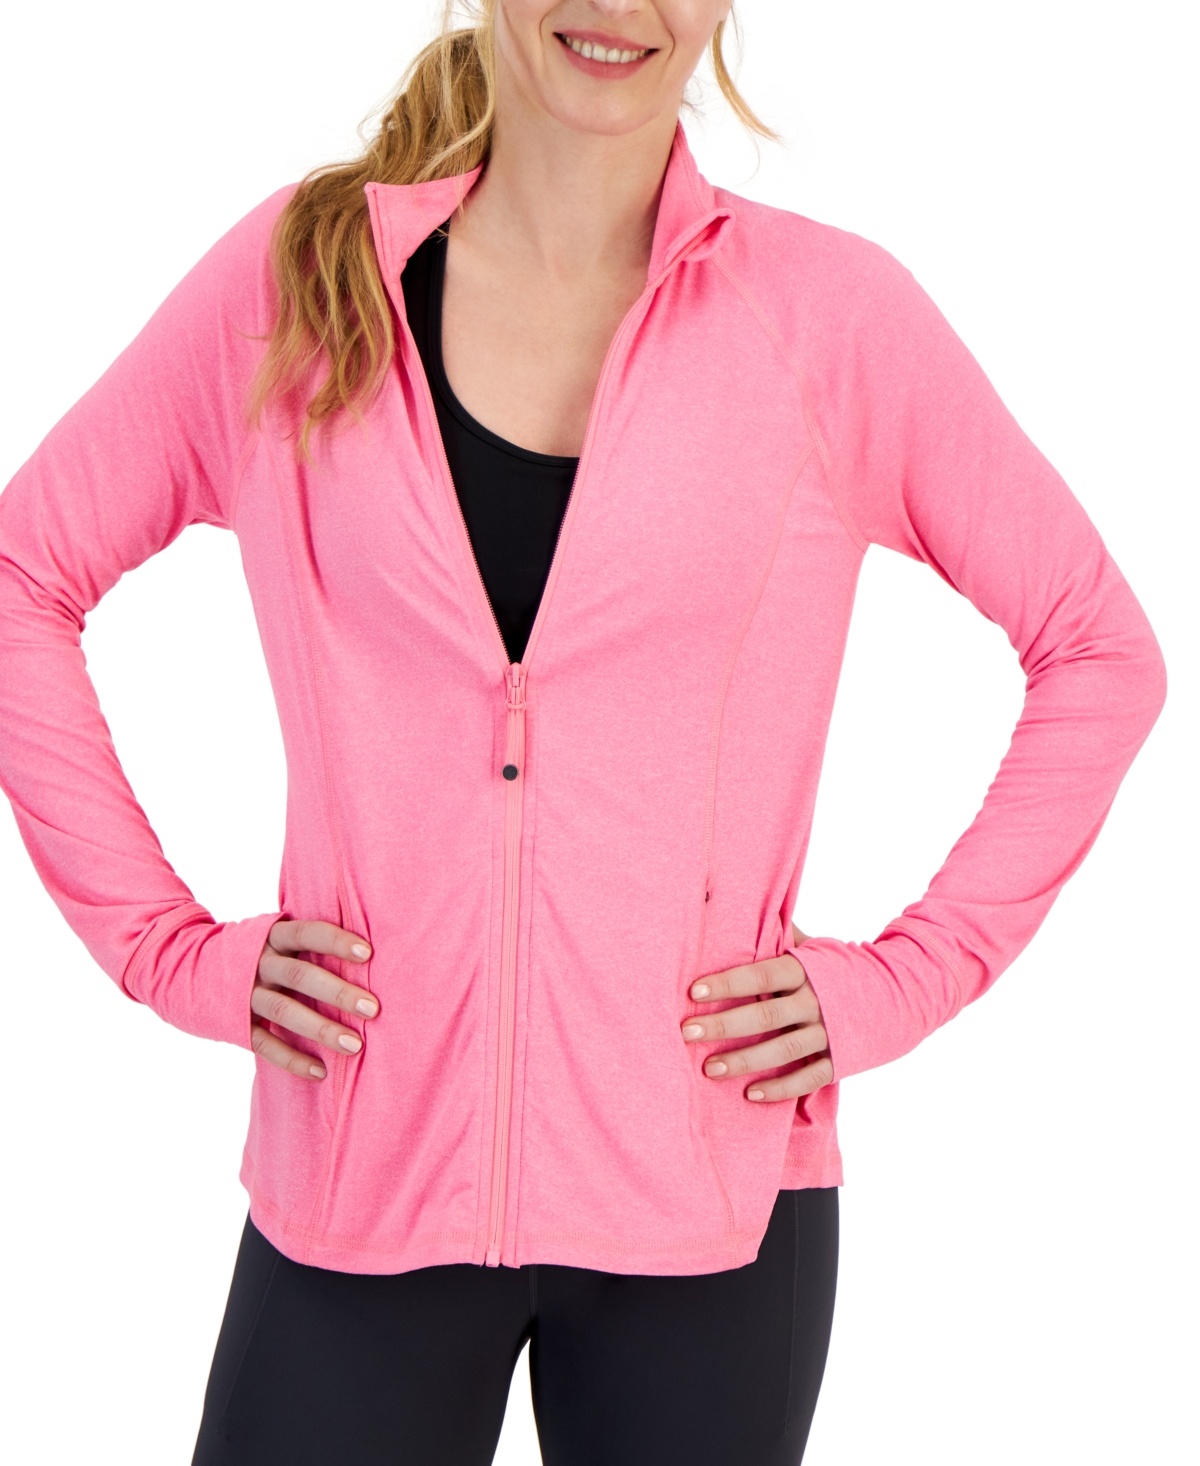 Women's Performance Full-Zip Jacket, Created for Macy's - Molten Pink